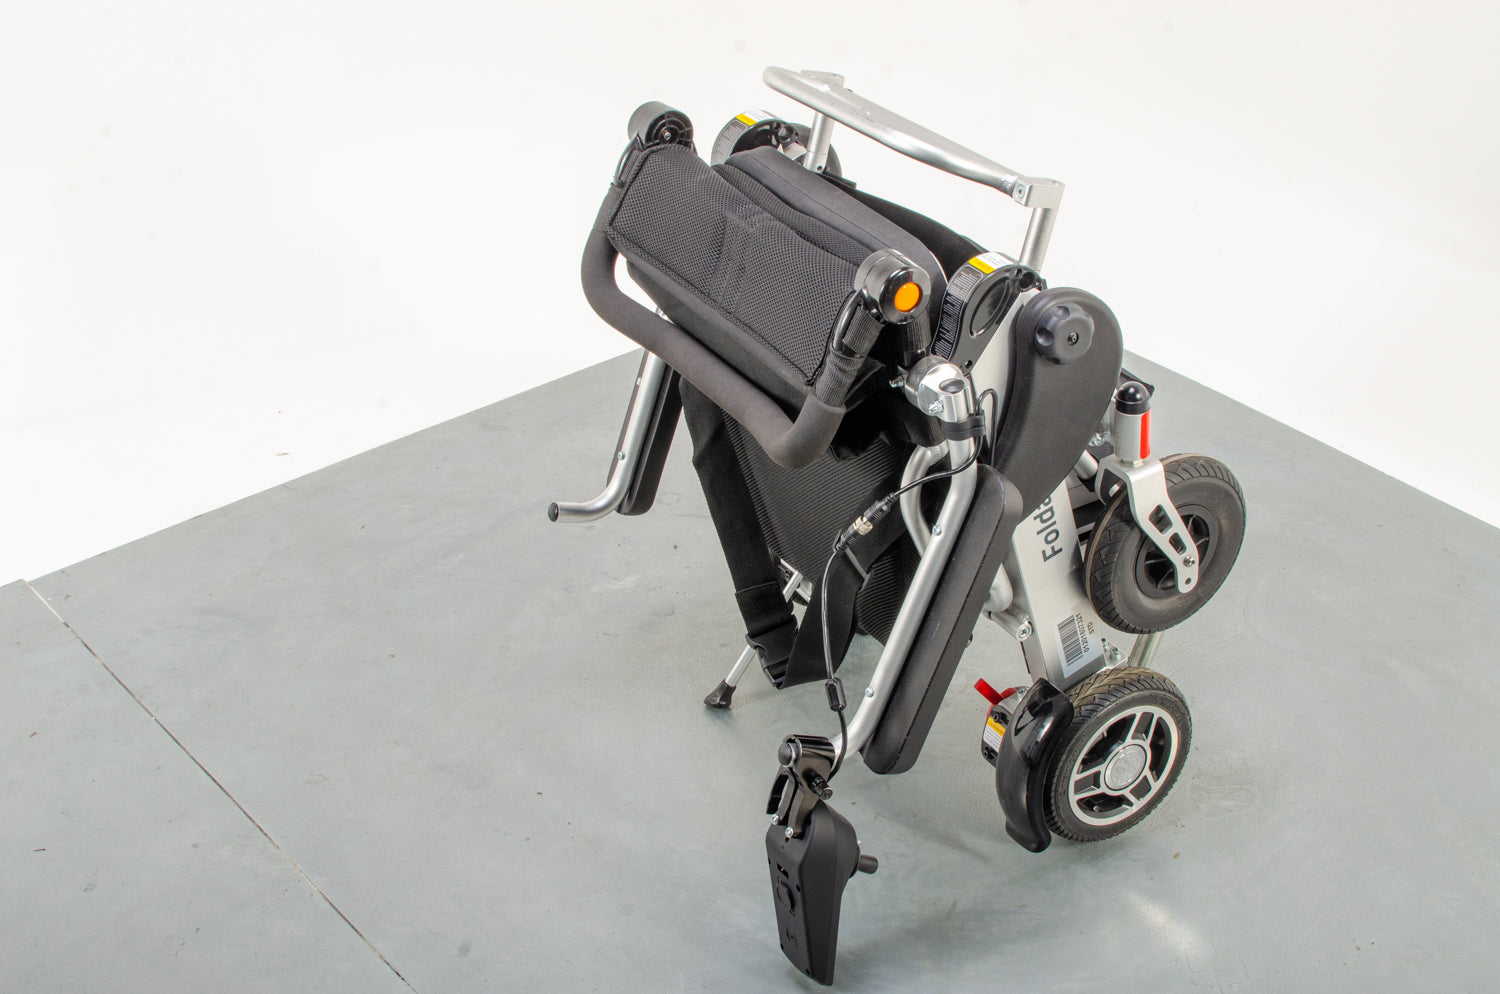 Foldalite Lightweight Lithium Folding Travel Electric Wheelchair Powerchair Motion Healthcare